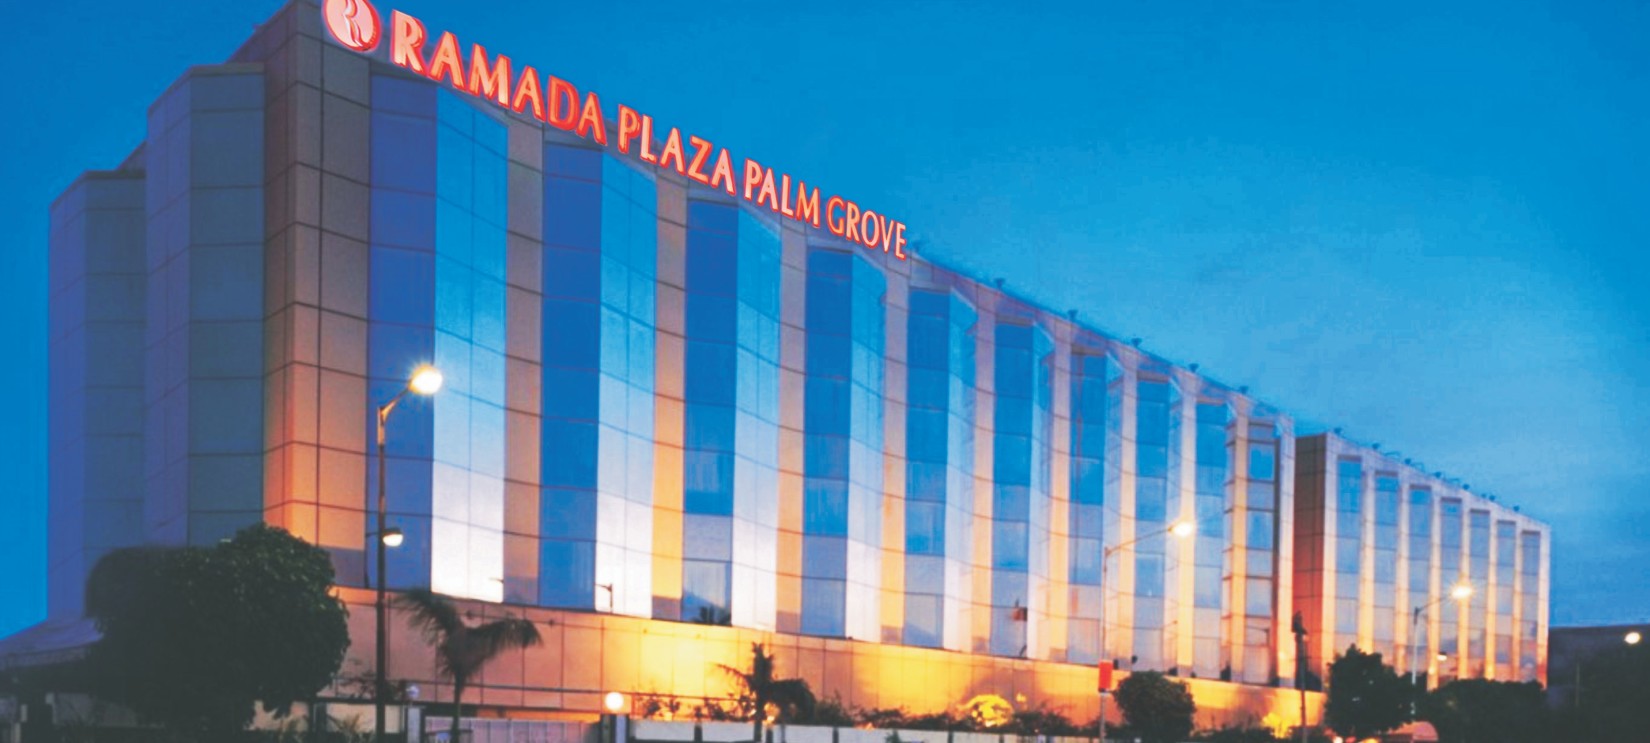 Facade of Hotel Ramada Plaza Palm Grove Juhu Mumbai